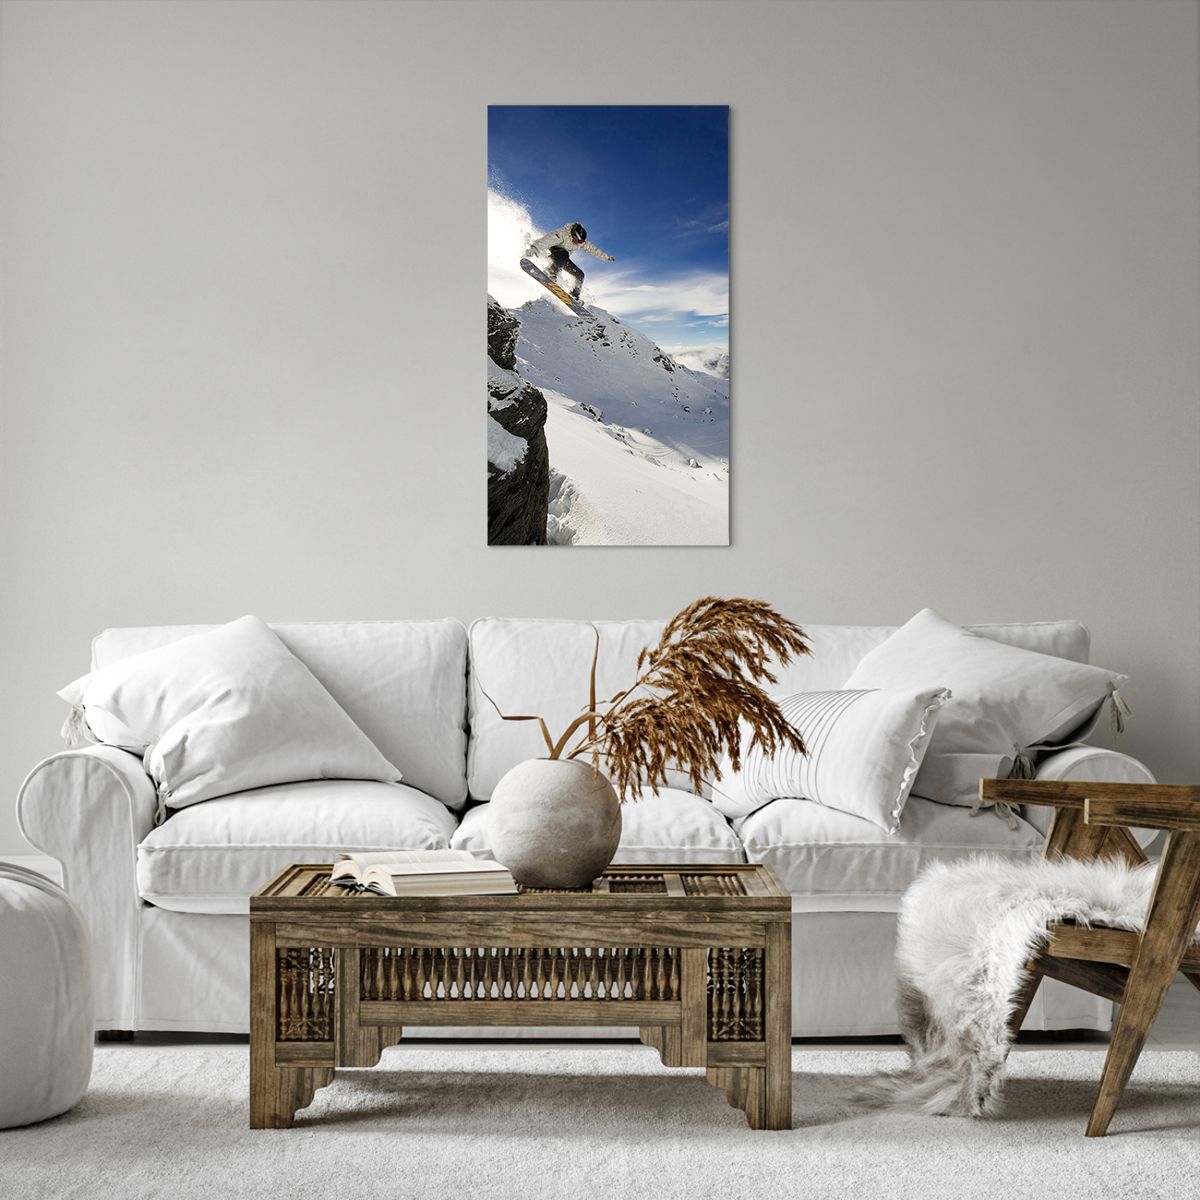 Quadro su tela Snowboard, Quadro su tela Paesaggio, Quadro su tela Montagne, Quadro su tela Neve, Quadro su tela Sport